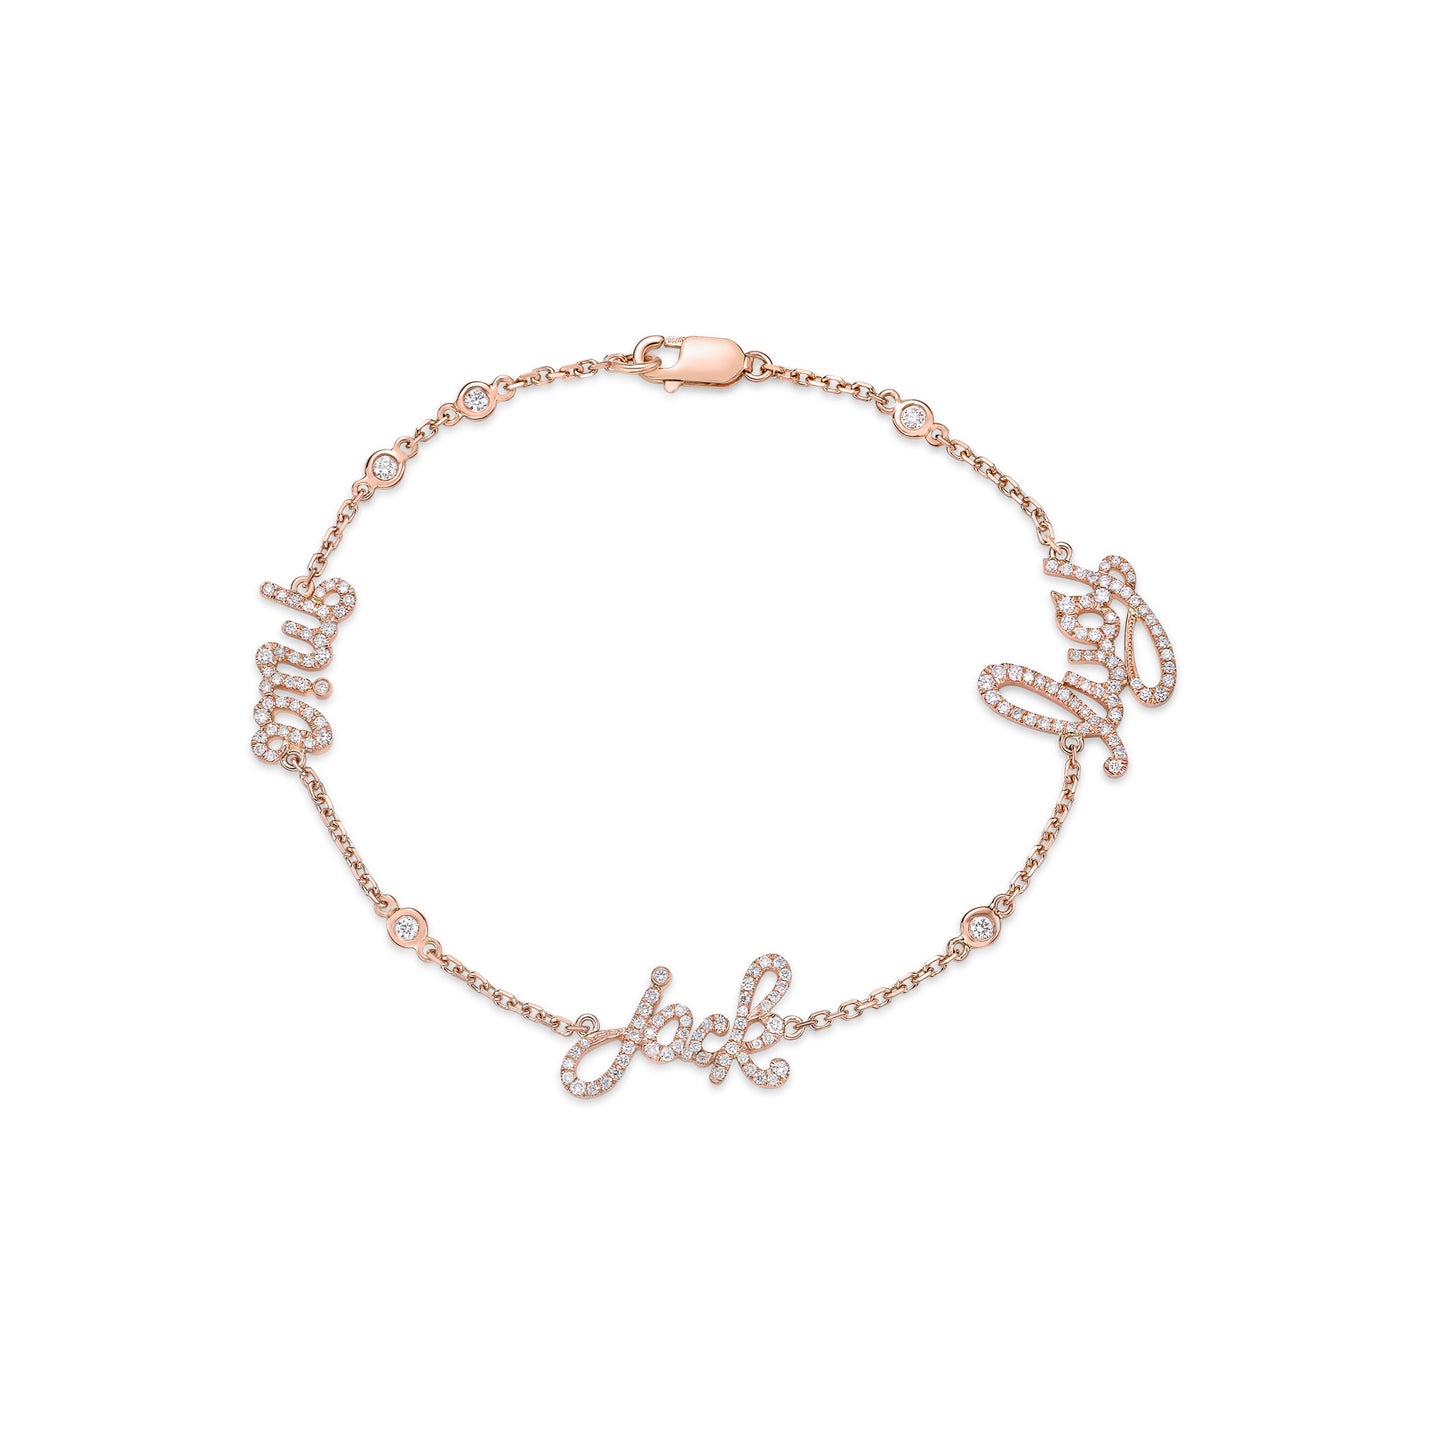 Custom name bracelet with pave-set diamonds in a handmade 18K Rose Gold setting